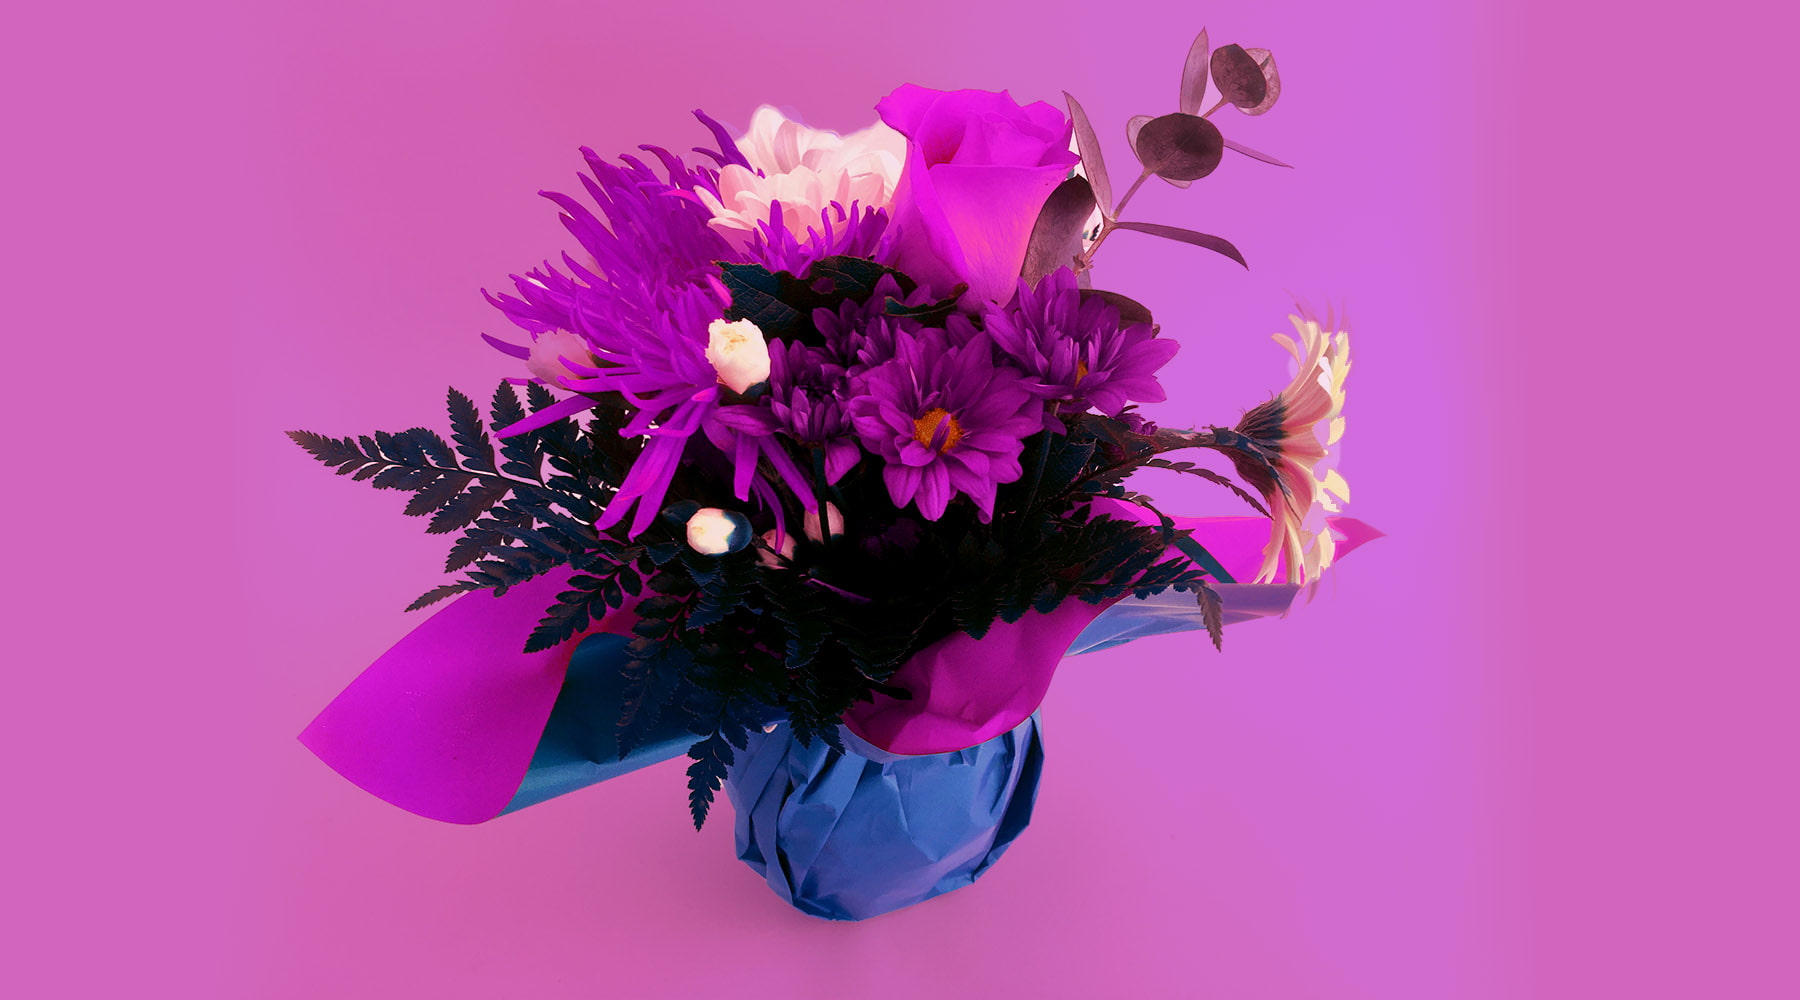 Tips for Arranging Flowers in Vases